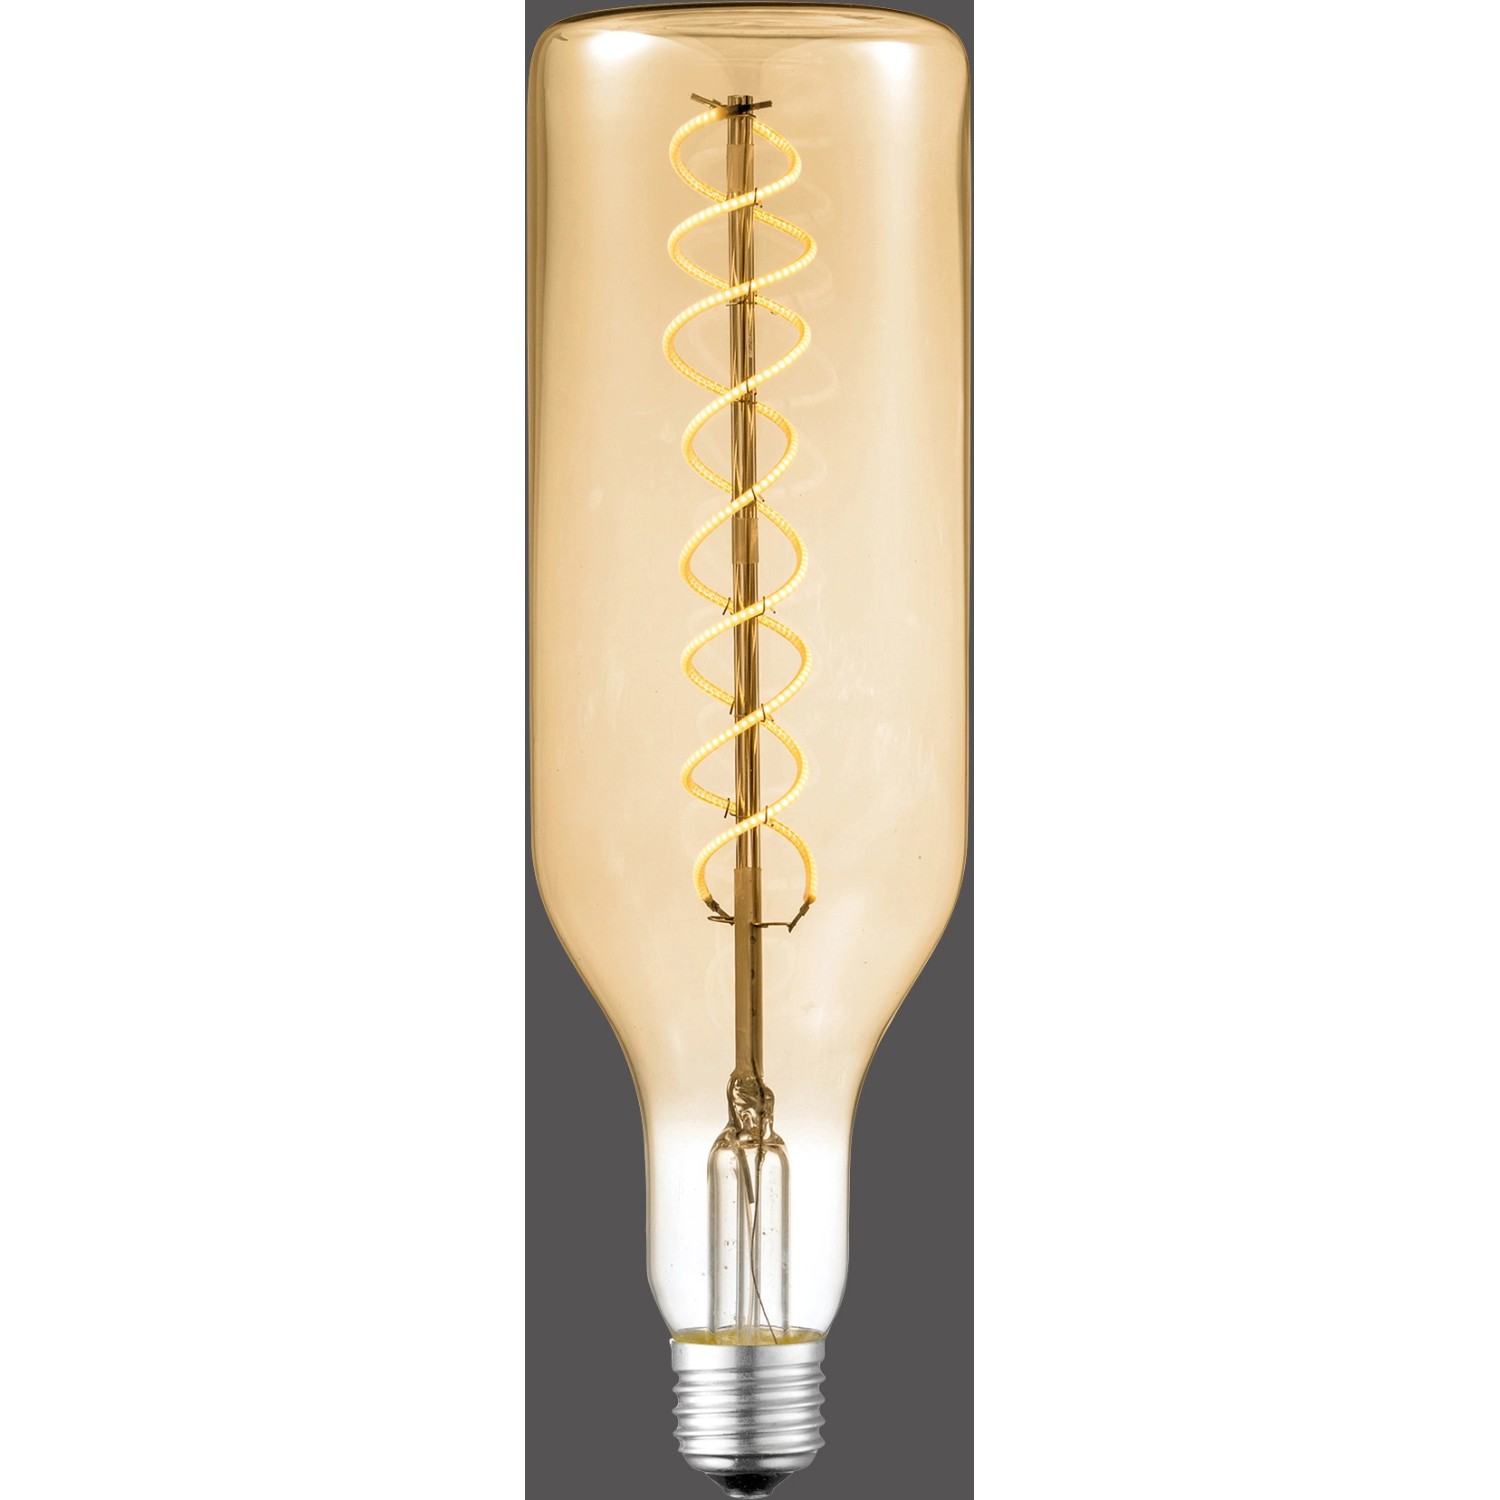 Just Light. LED-Leuchtmittel E27 4 W Warmweiß 270 lm 24,5 x 7,5 cm (H x Ø) von Just Light.